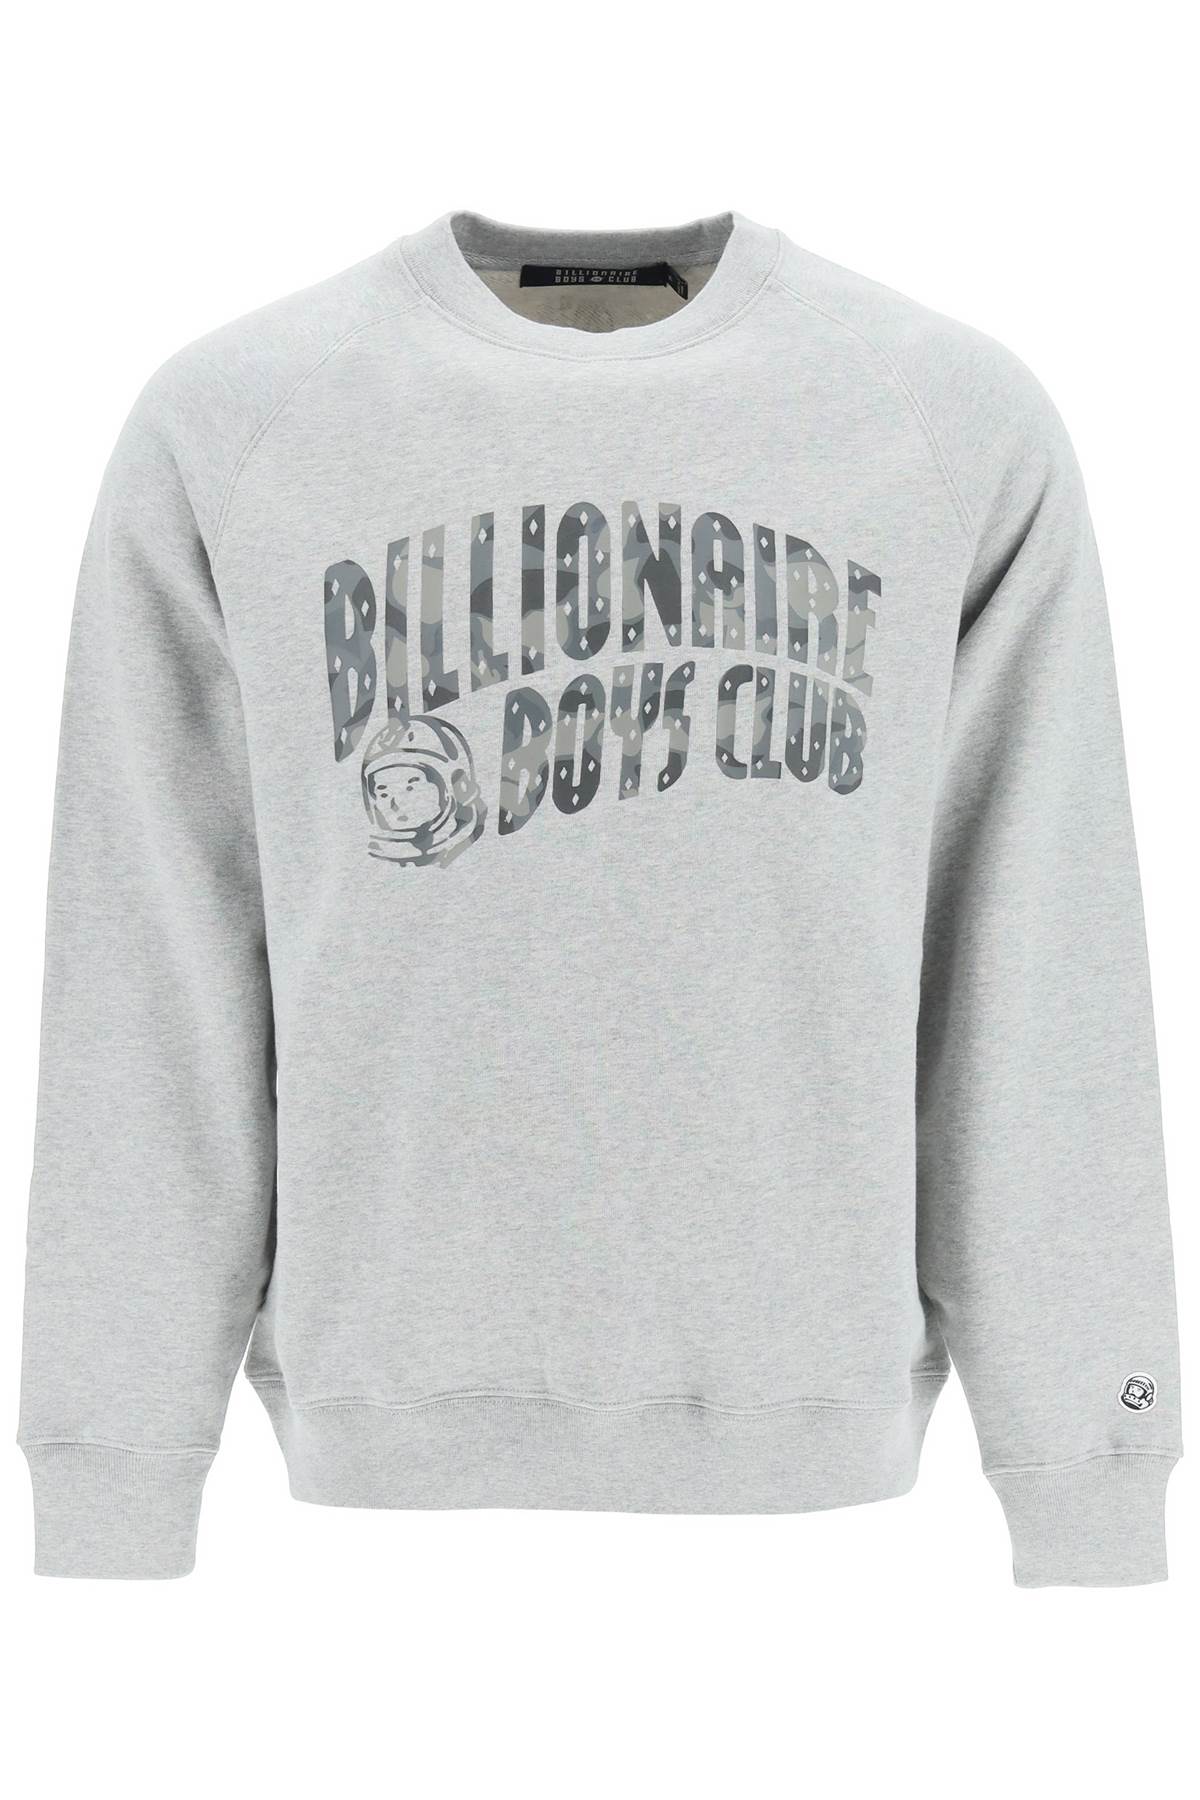 Billionaire Boys Club camo Arch Logo Crewneck Sweatshirt